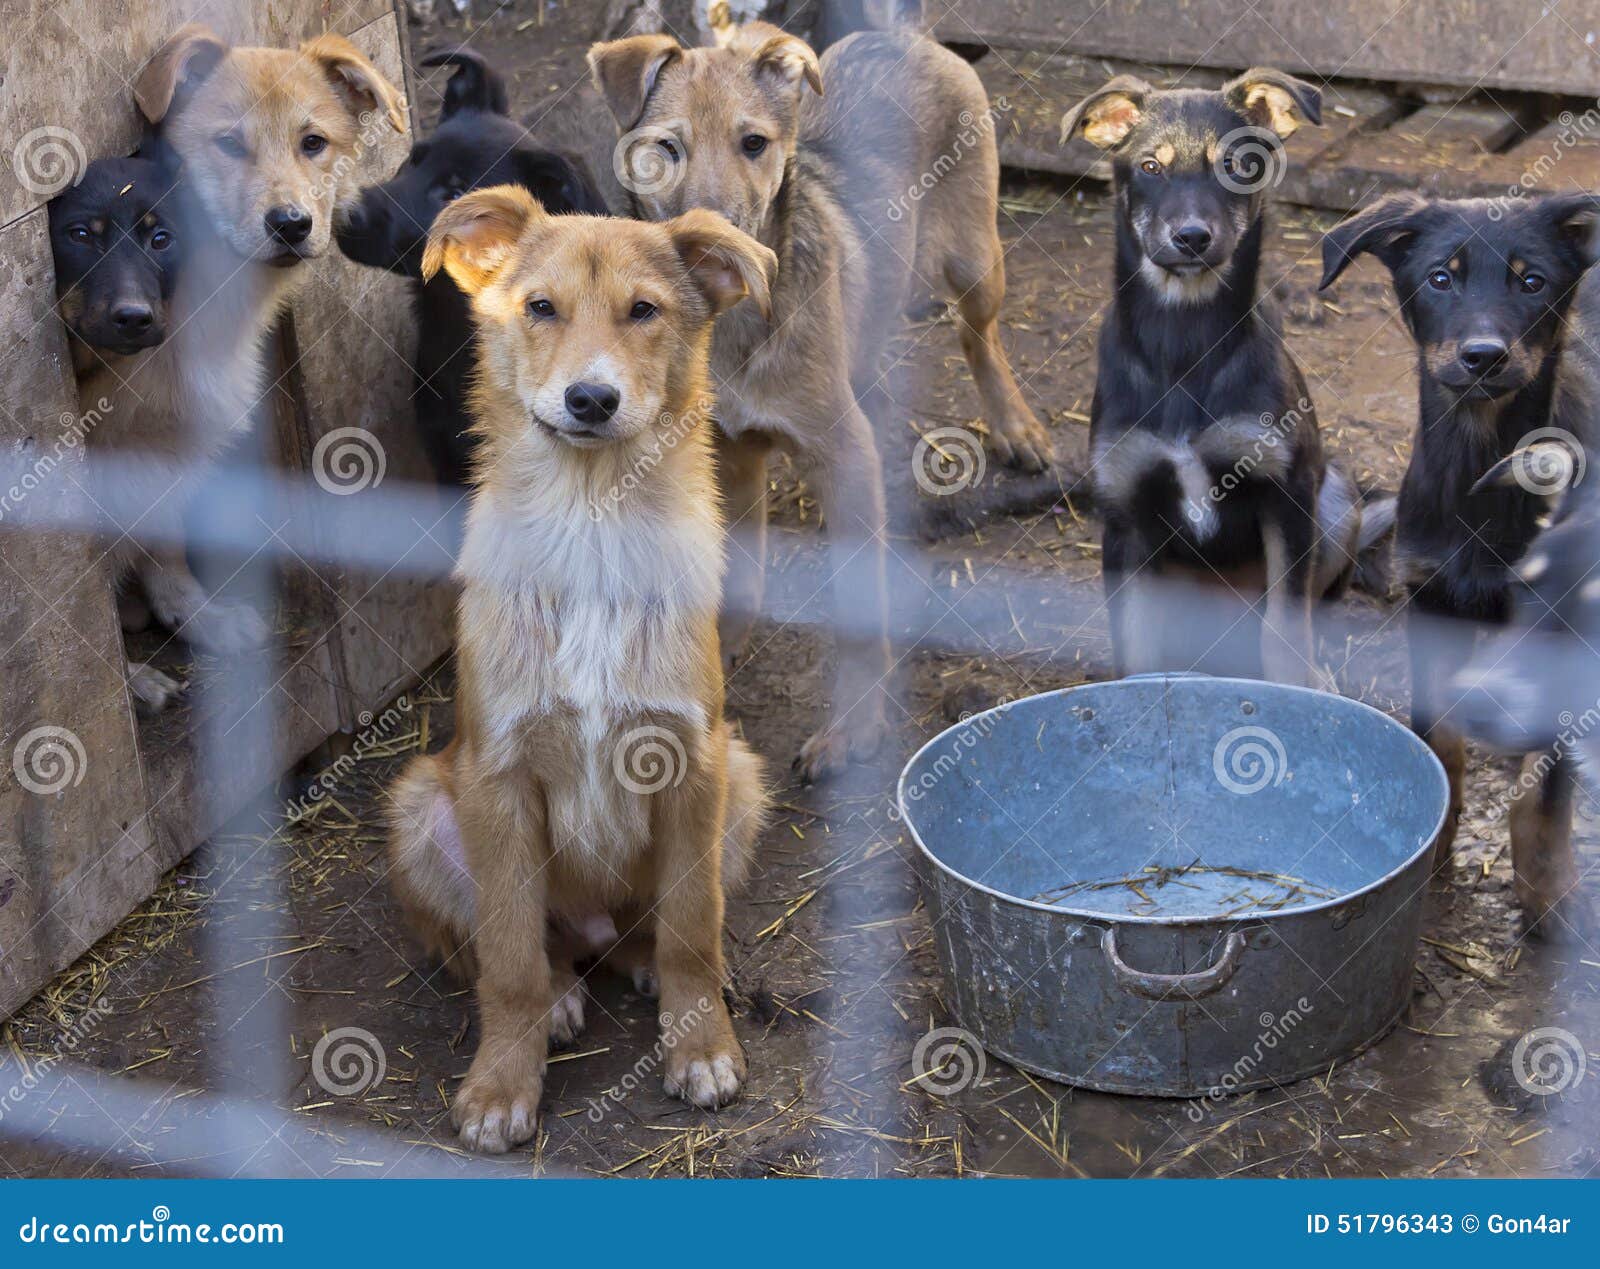 A Lot Of Sad Puppies Behind Bars At The Shelter. Stock Photo - Image: 51796343